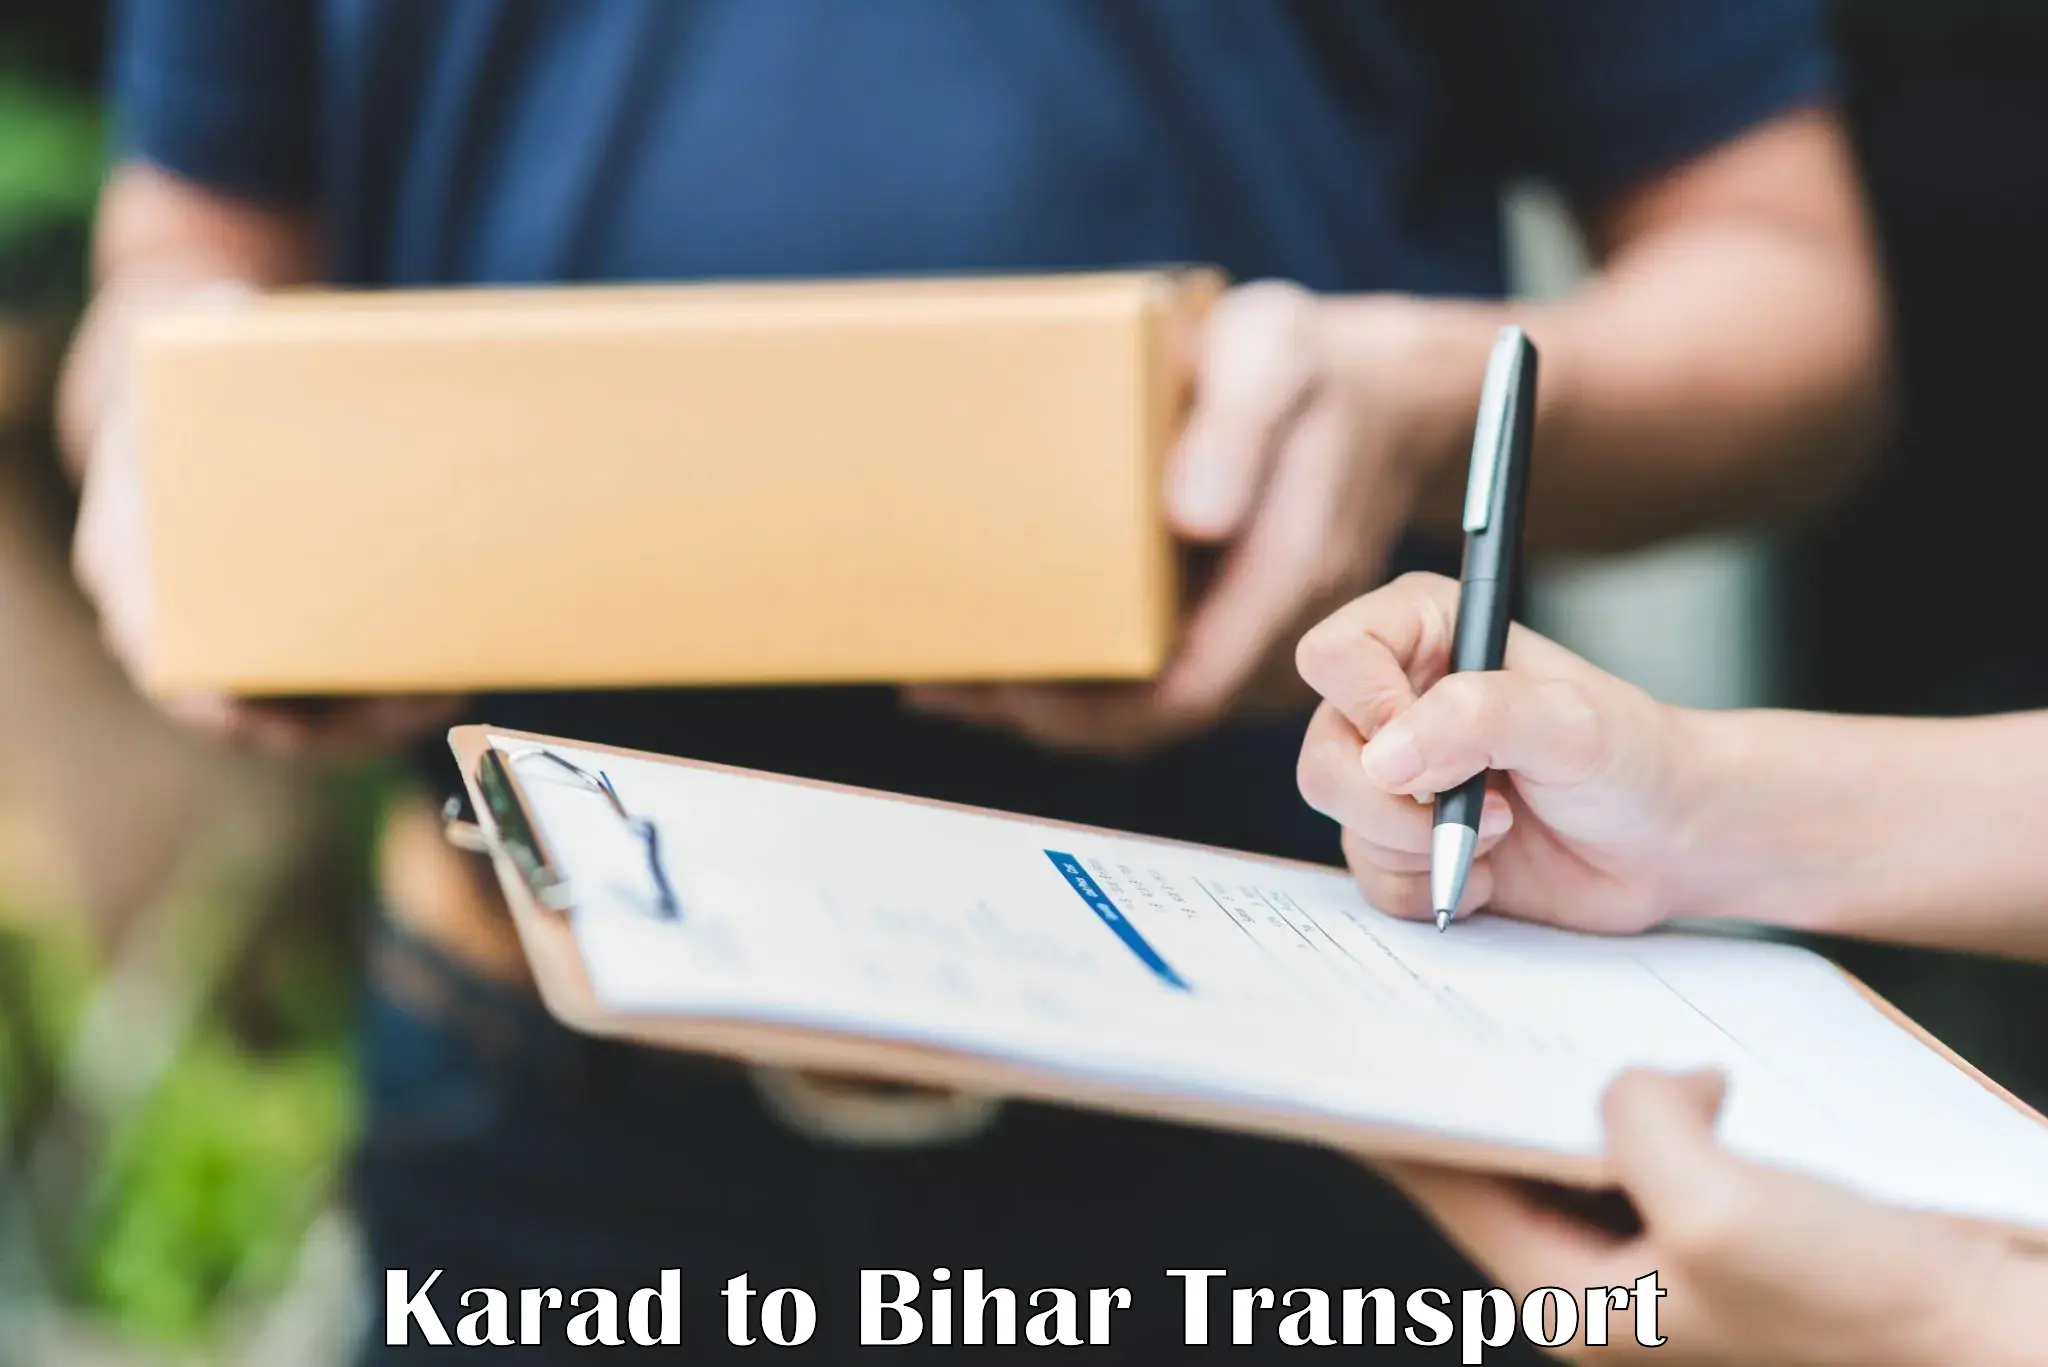 Online transport service Karad to Mahaddipur